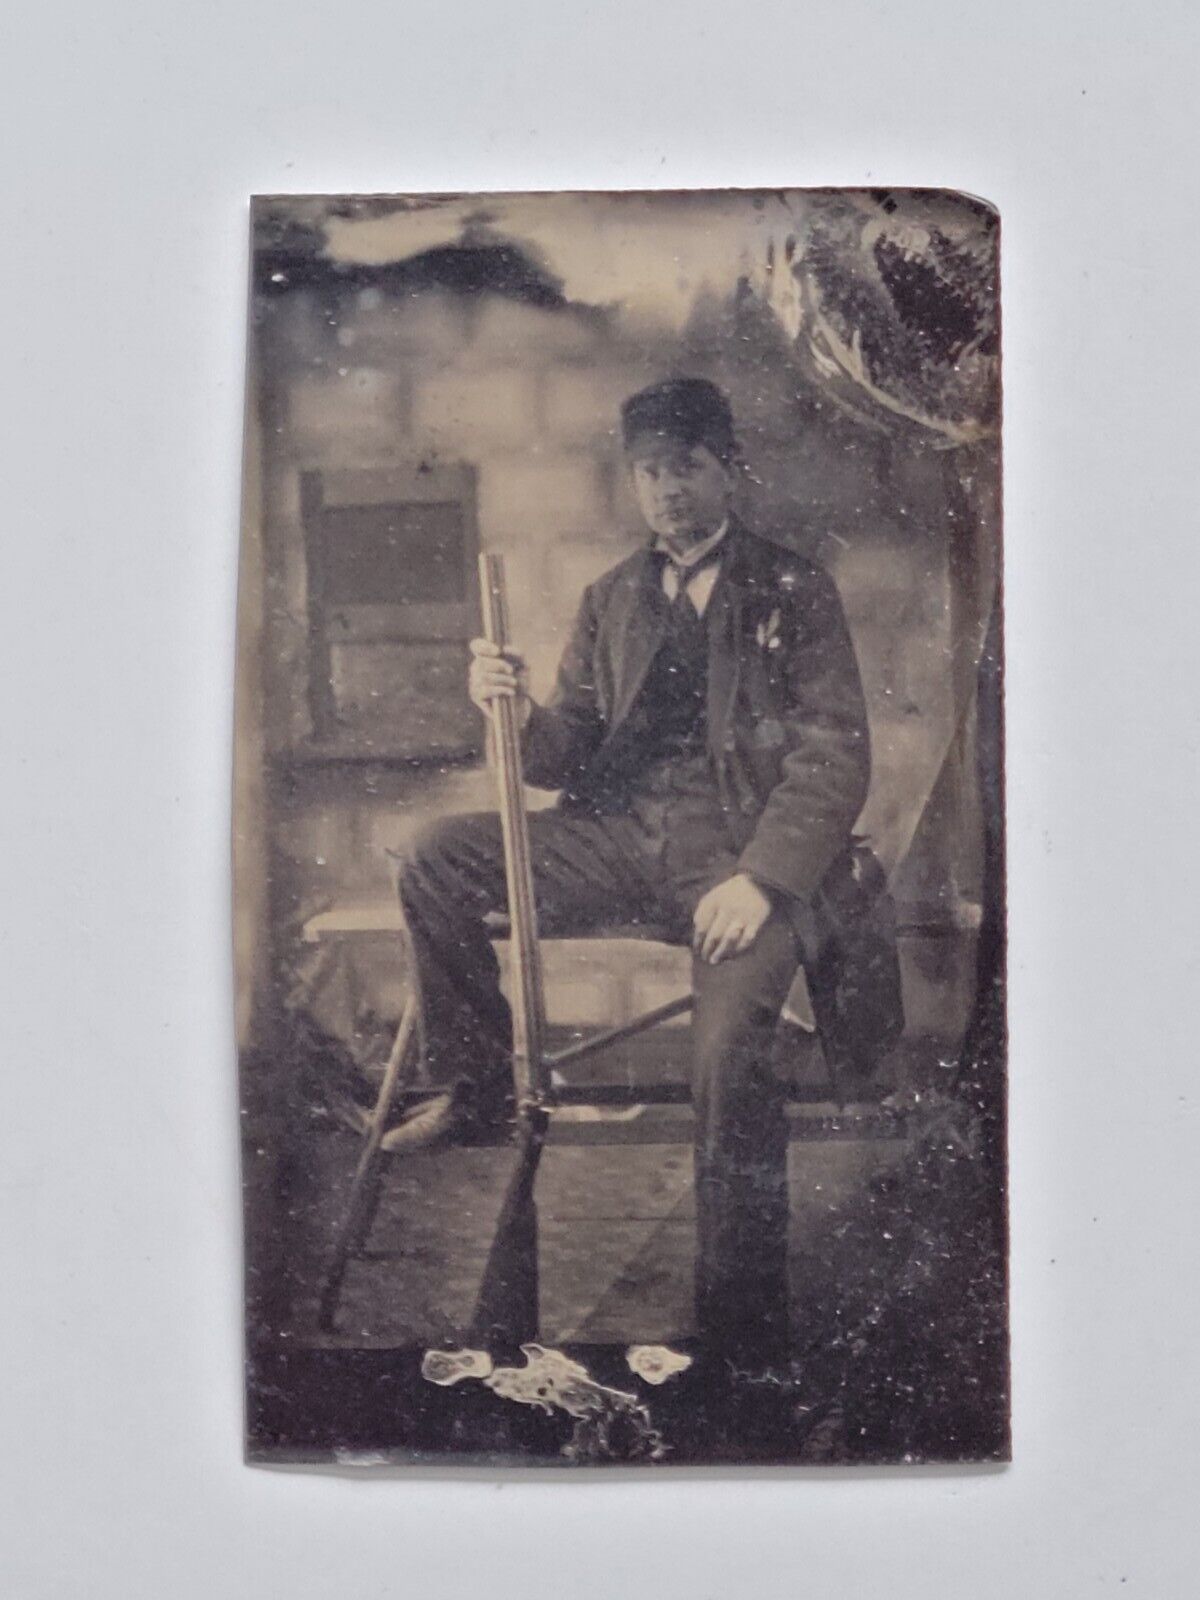 1890s Tintype Photograph, Seated Man Holding A Shotgun Rifle